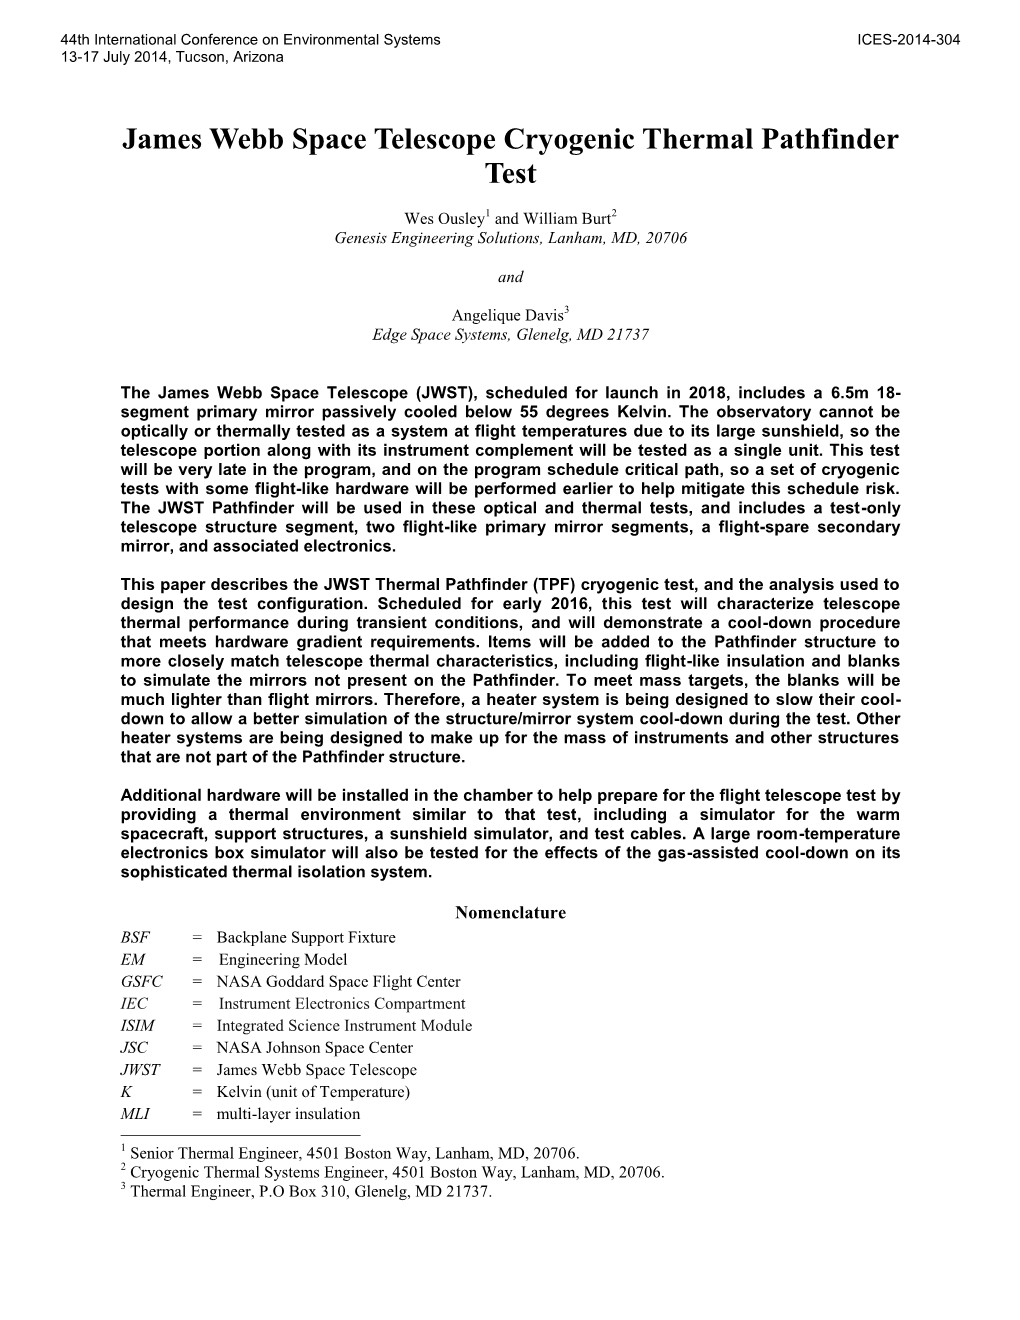 James Webb Space Telescope Cryogenic Thermal Pathfinder Test